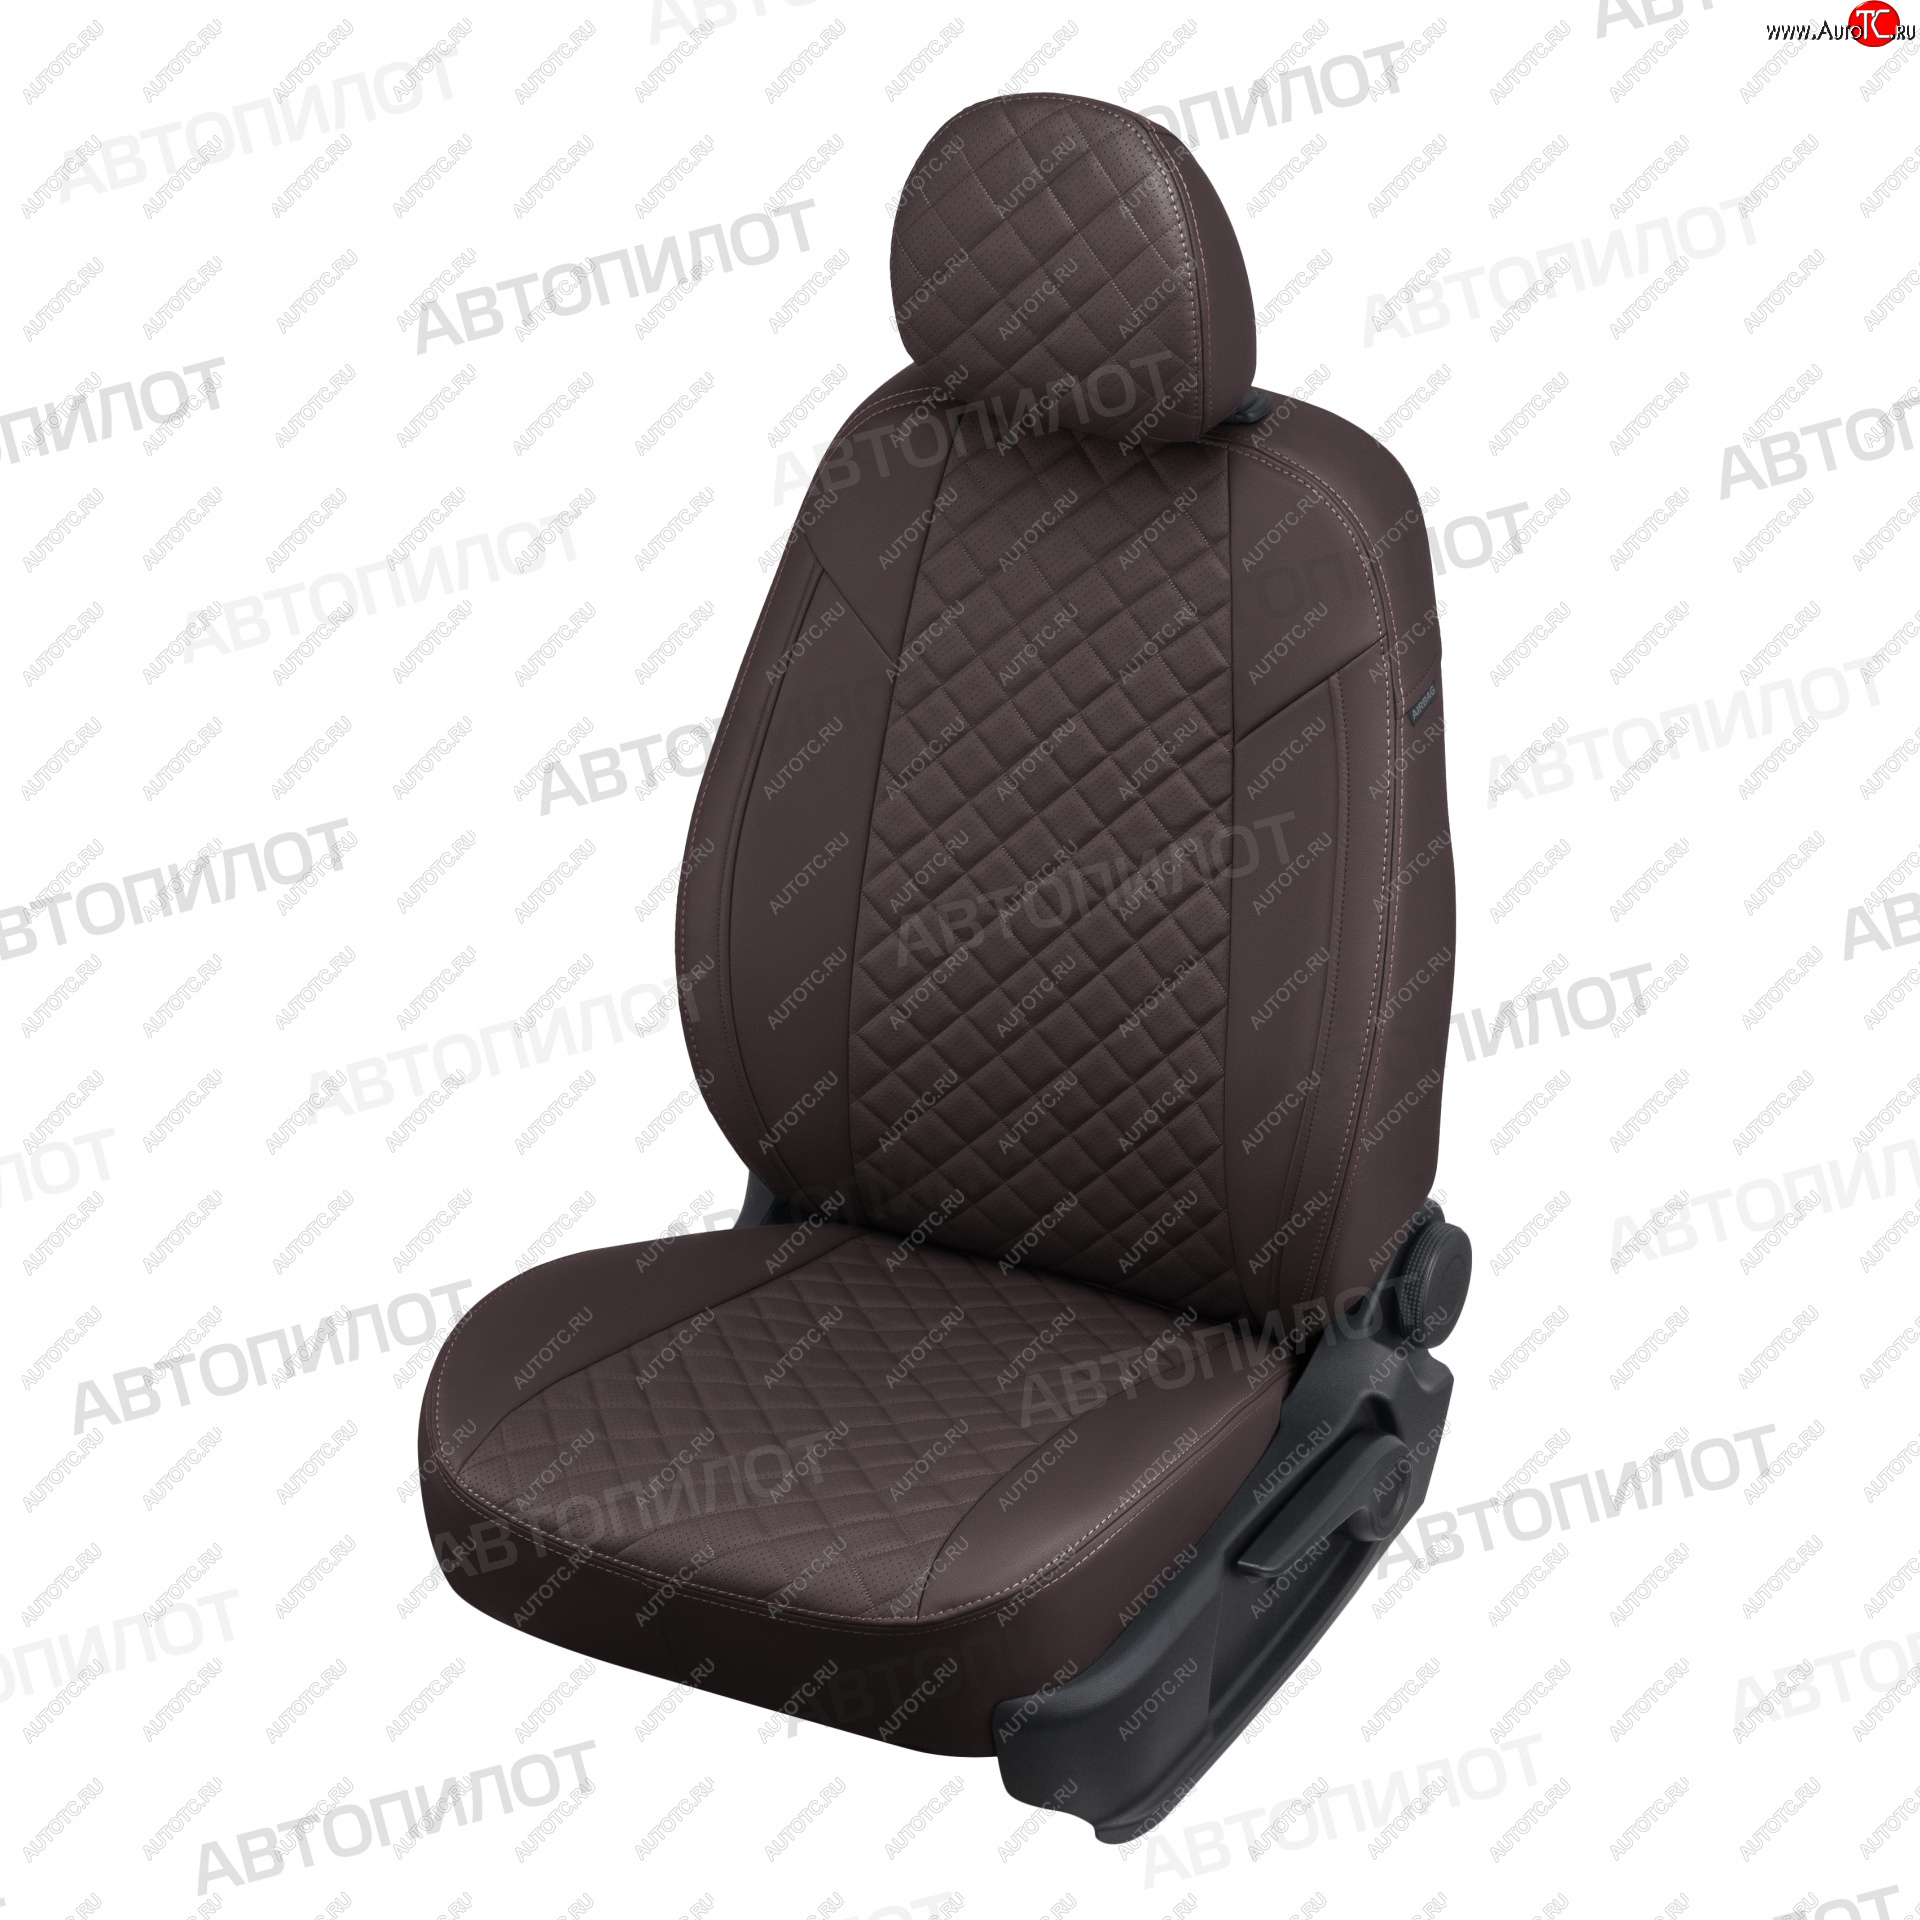 13 999 р. Чехлы сидений (экокожа) Автопилот Ромб  Hyundai Sonata  NF (2004-2010) (шоколад)